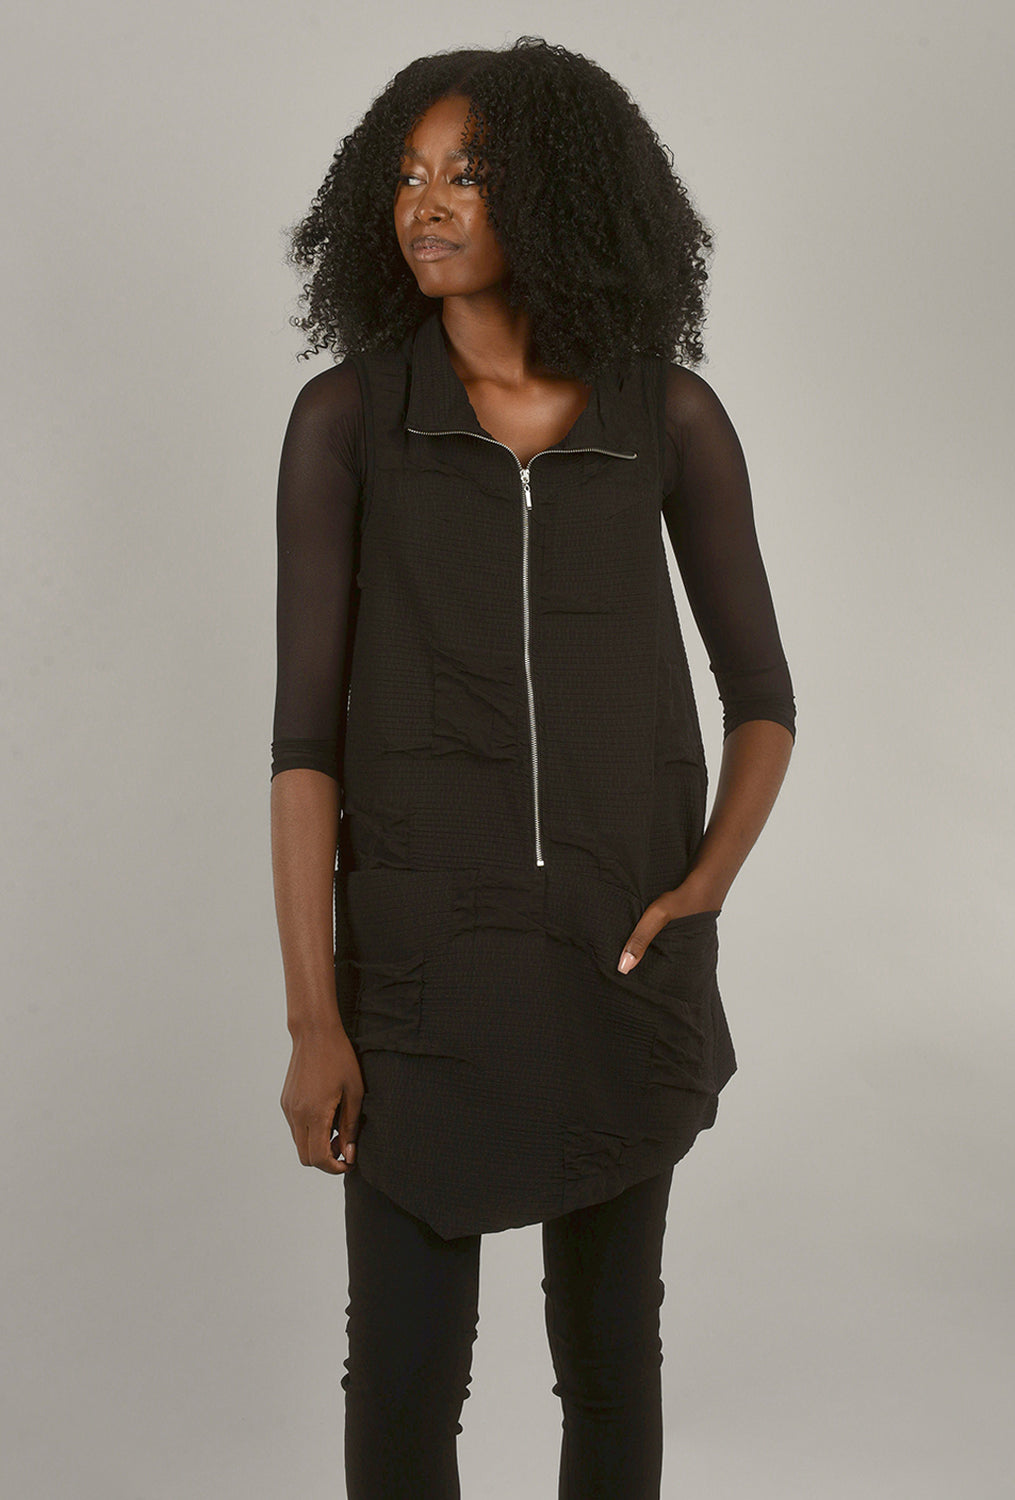 Sleevey Wonders Long Sleeve Basic Jersey Sleeves, Black Sleevey Wonders  suitable for a wide range of occasions